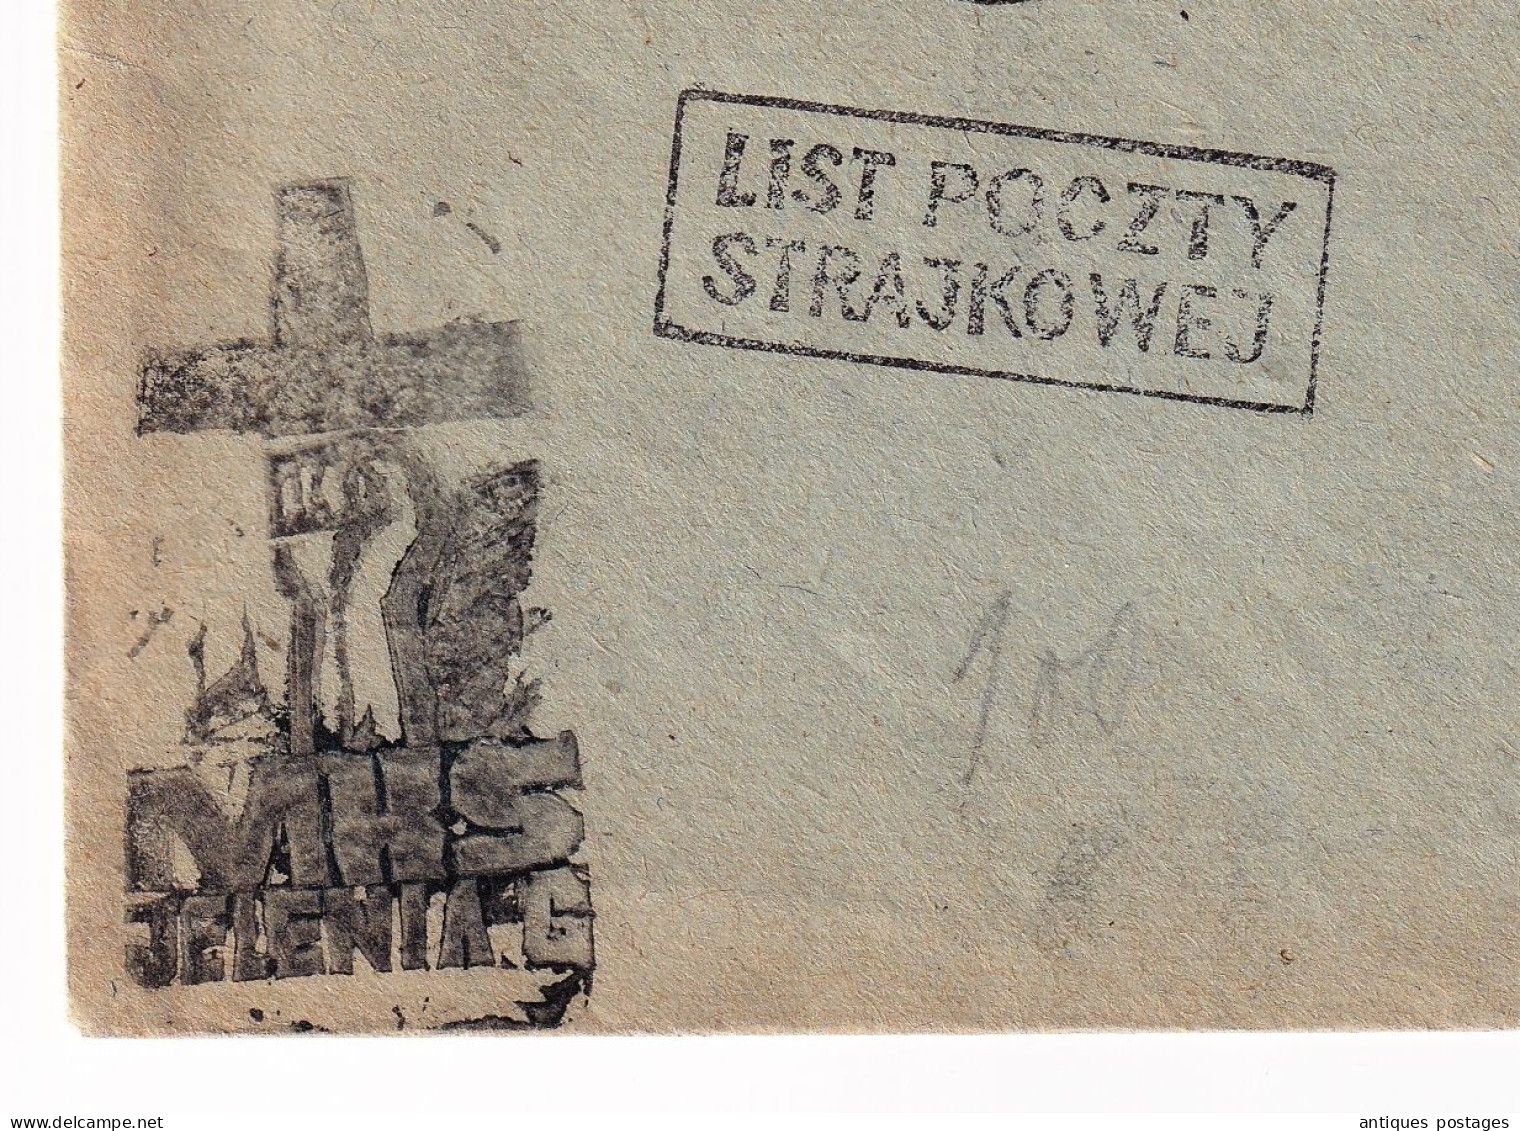 Lettre POCZTA STRAJKOWA Jelenia Góra 22 -1-1981 MKS Solidarność List Poczty Strajkowej Pologne Poland Polska - Lettres & Documents